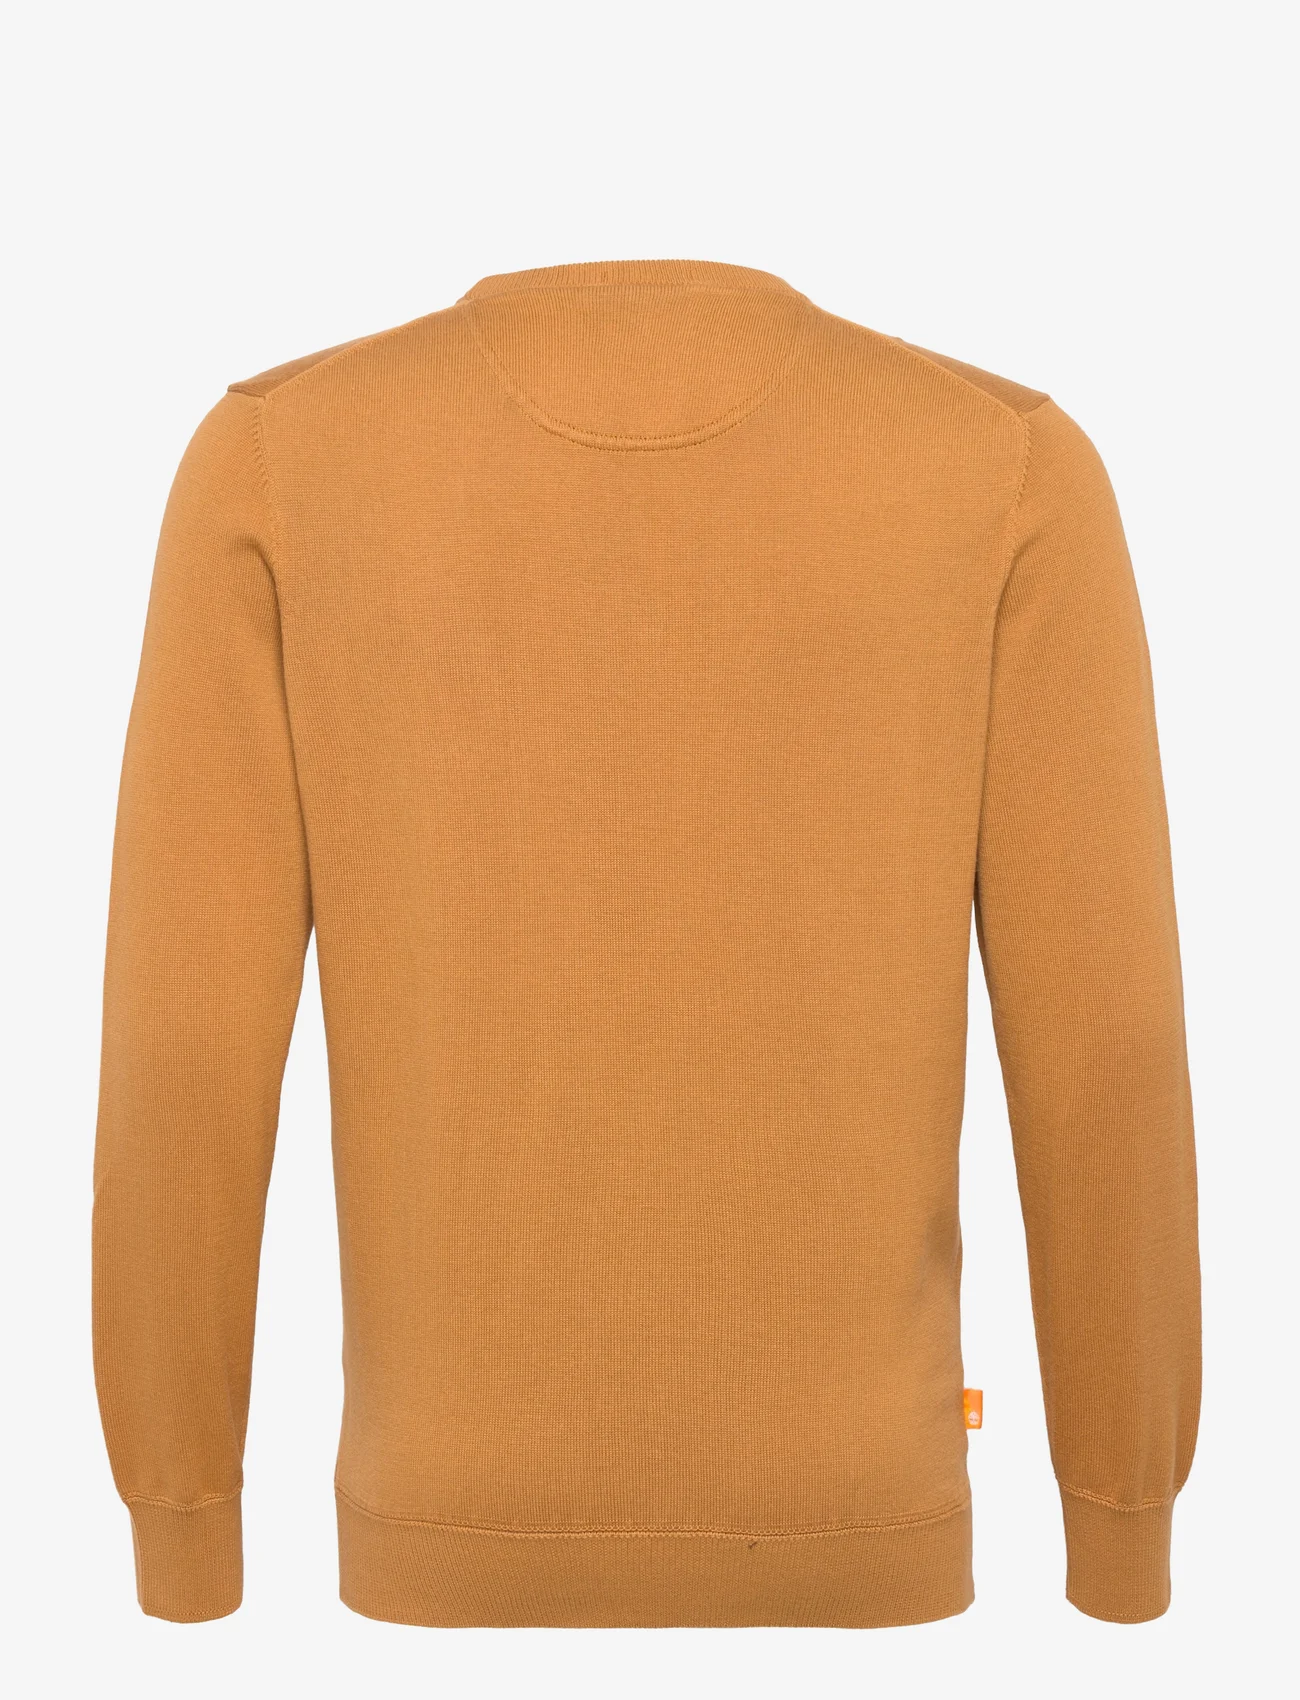 Timberland - WILLIAMS RIVER Cotton YD Sweater WHEAT BOOT - podstawowa odzież z dzianiny - wheat boot - 1